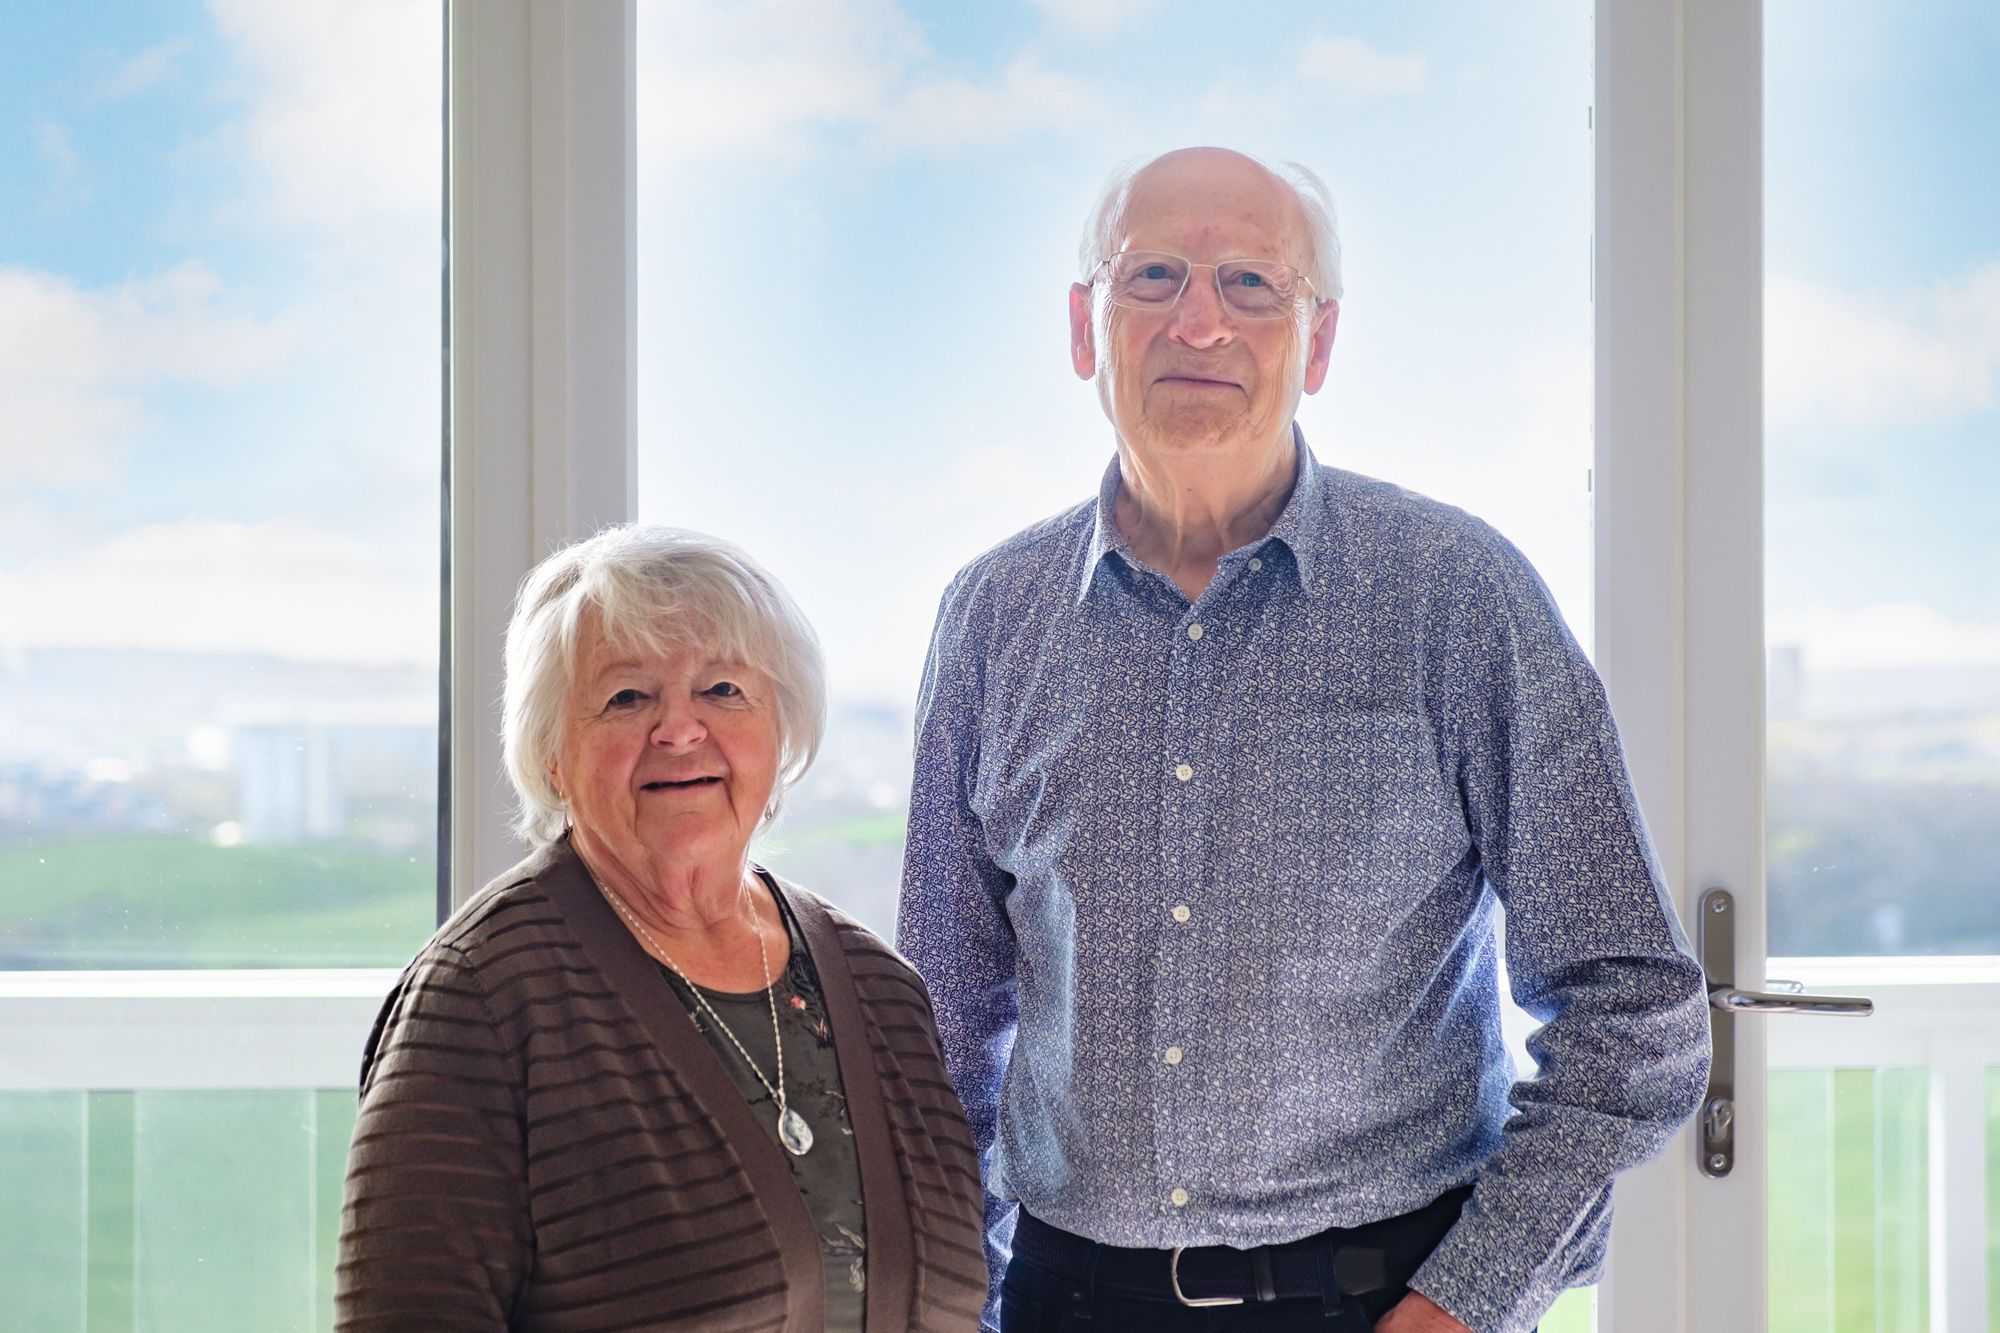 Portrait of elderly Montagu Court residents Roger and Angela